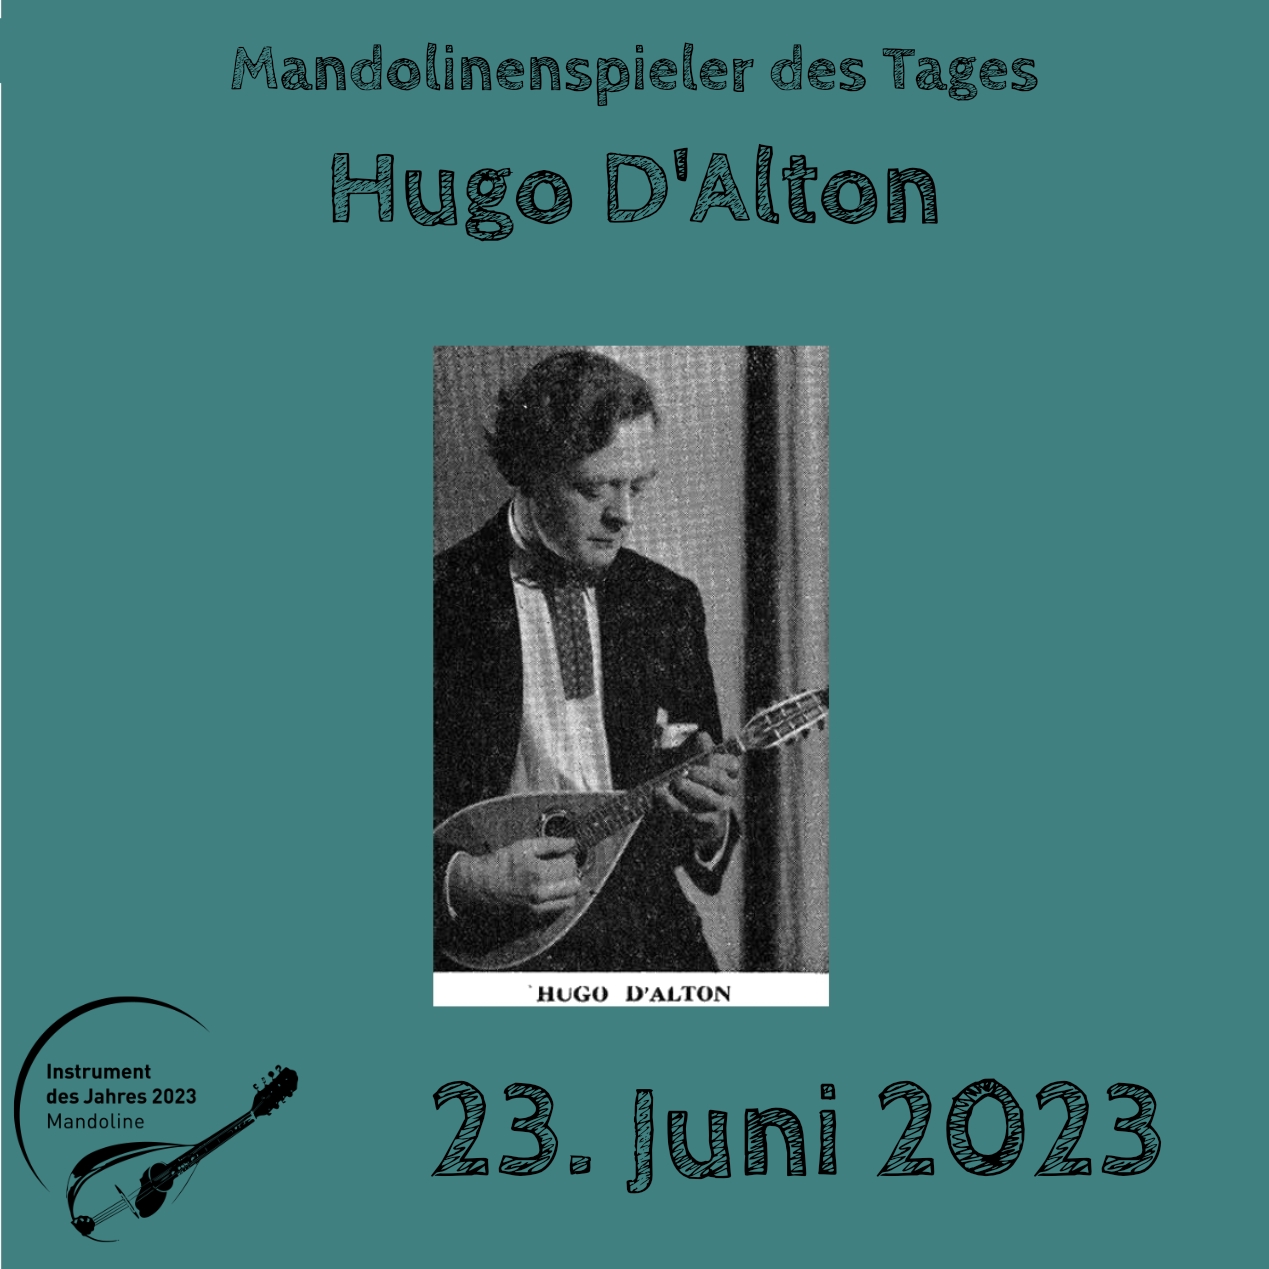 23. Juni - Hugo D'Alton Mandoline Instrument des Jahres 2023 Mandolinenspieler Mandolinenspielerin des Tages